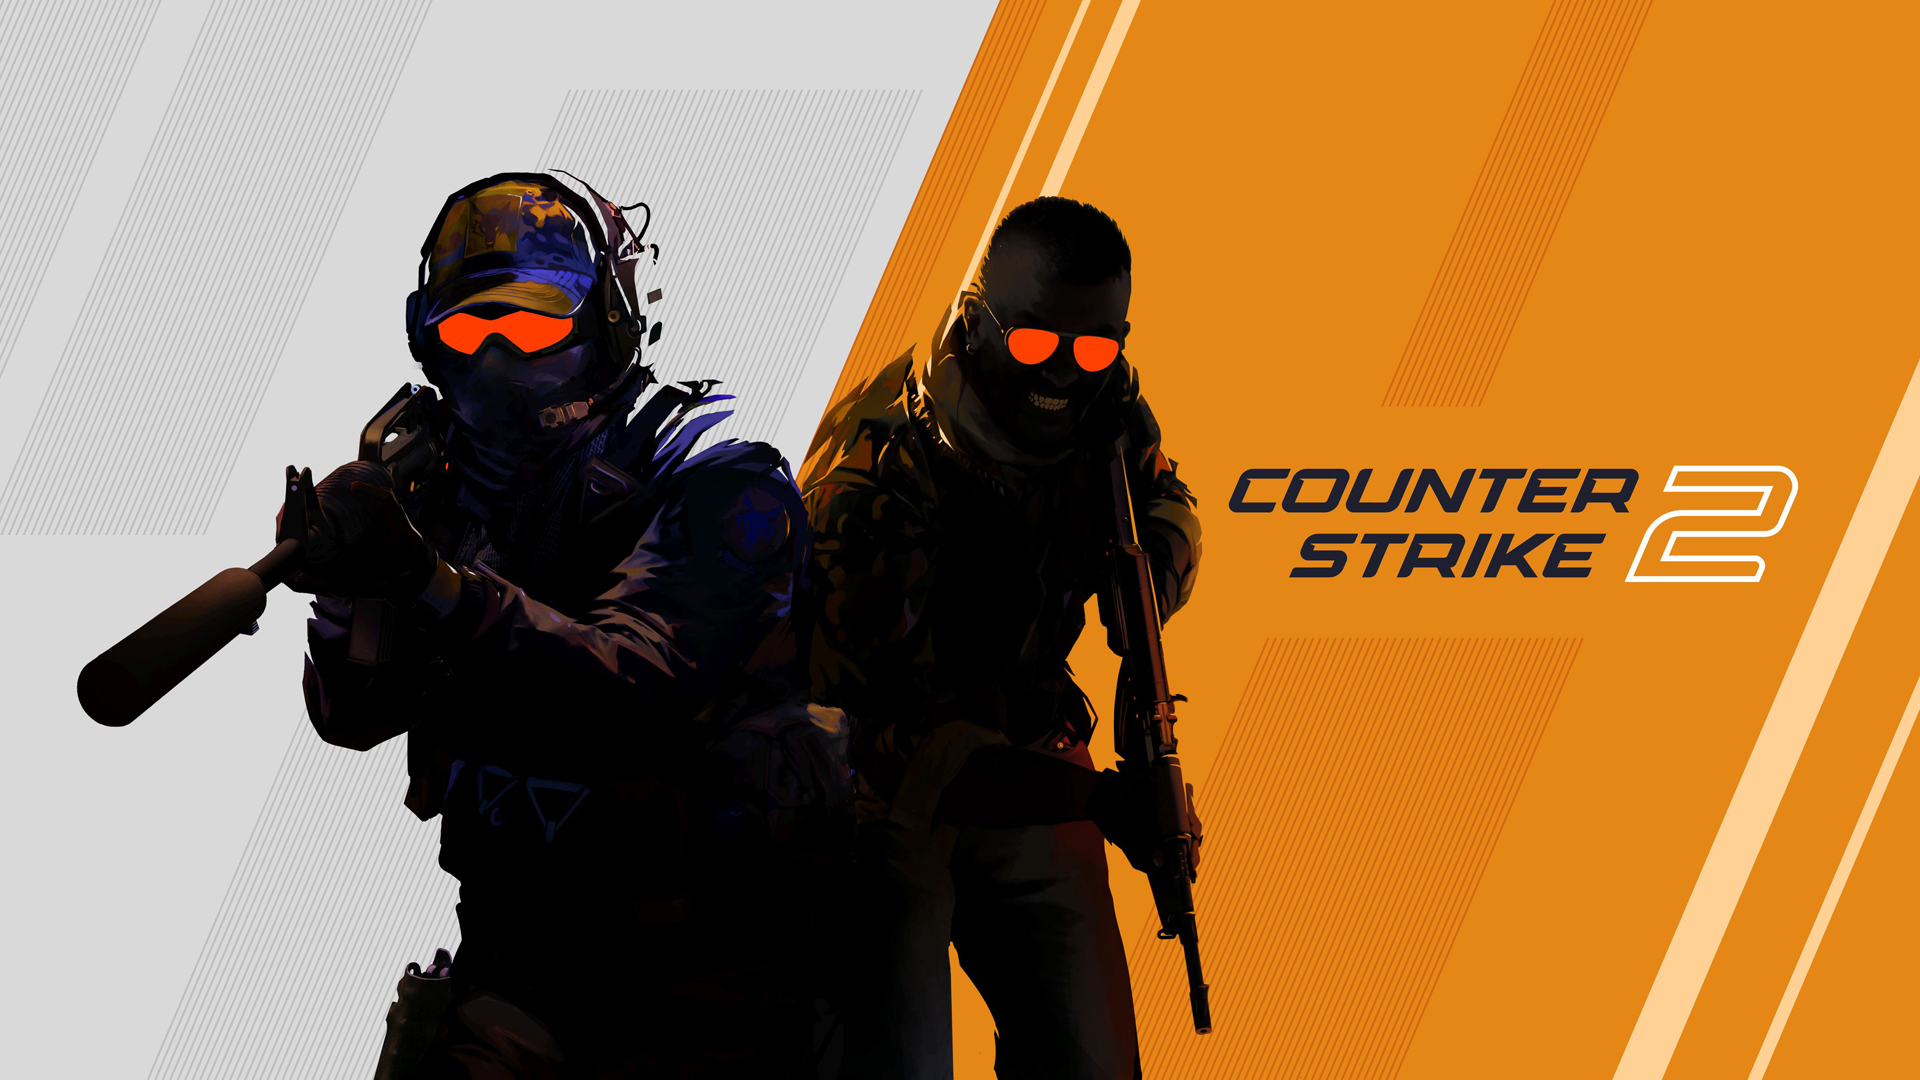 It looks like Counter-Strike 2 will launch next week thumbnail